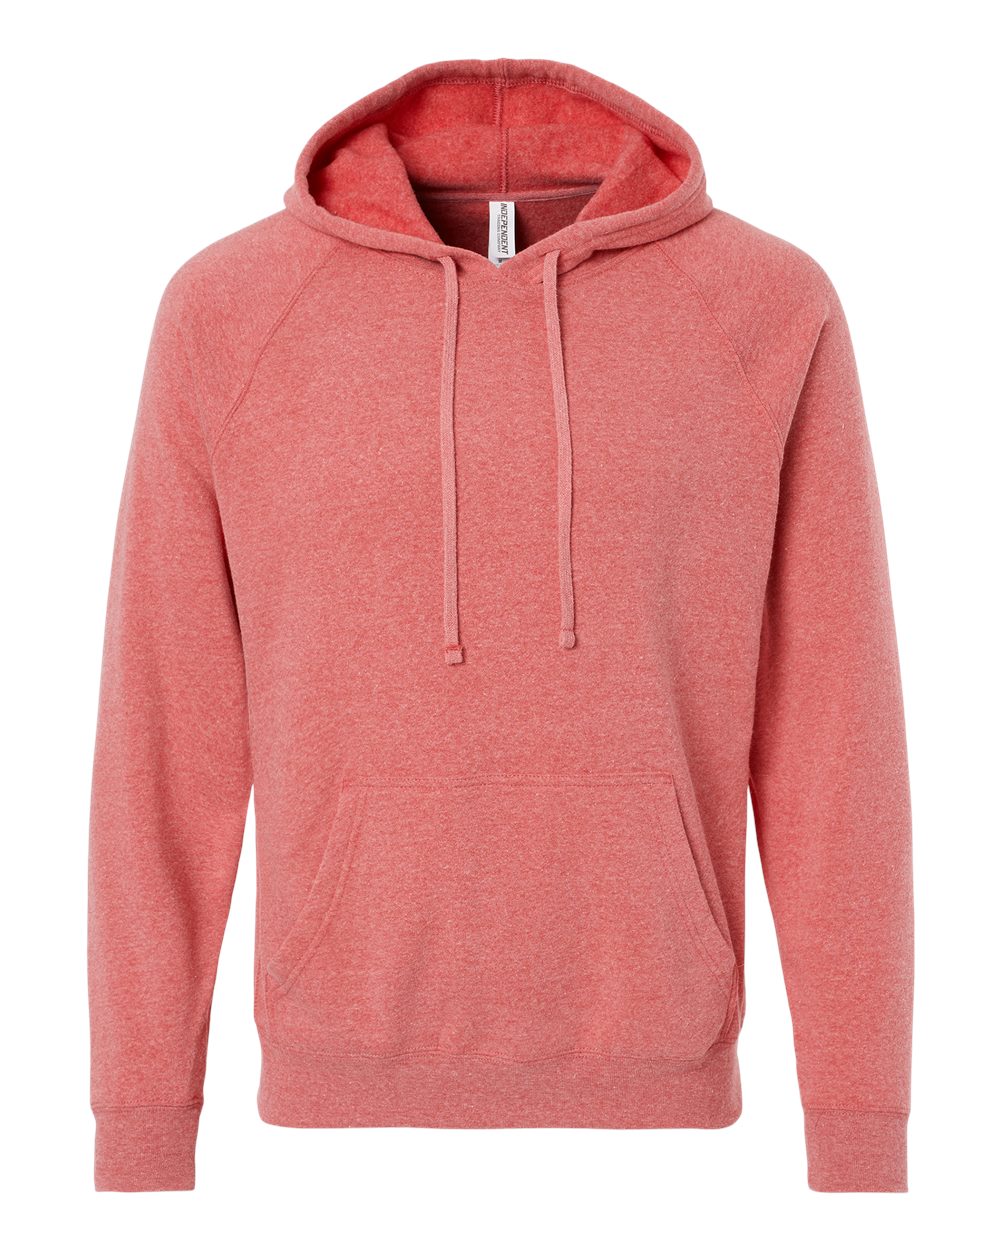 Independent Trading Co. - Special Blend Raglan Hooded Sweatshirt